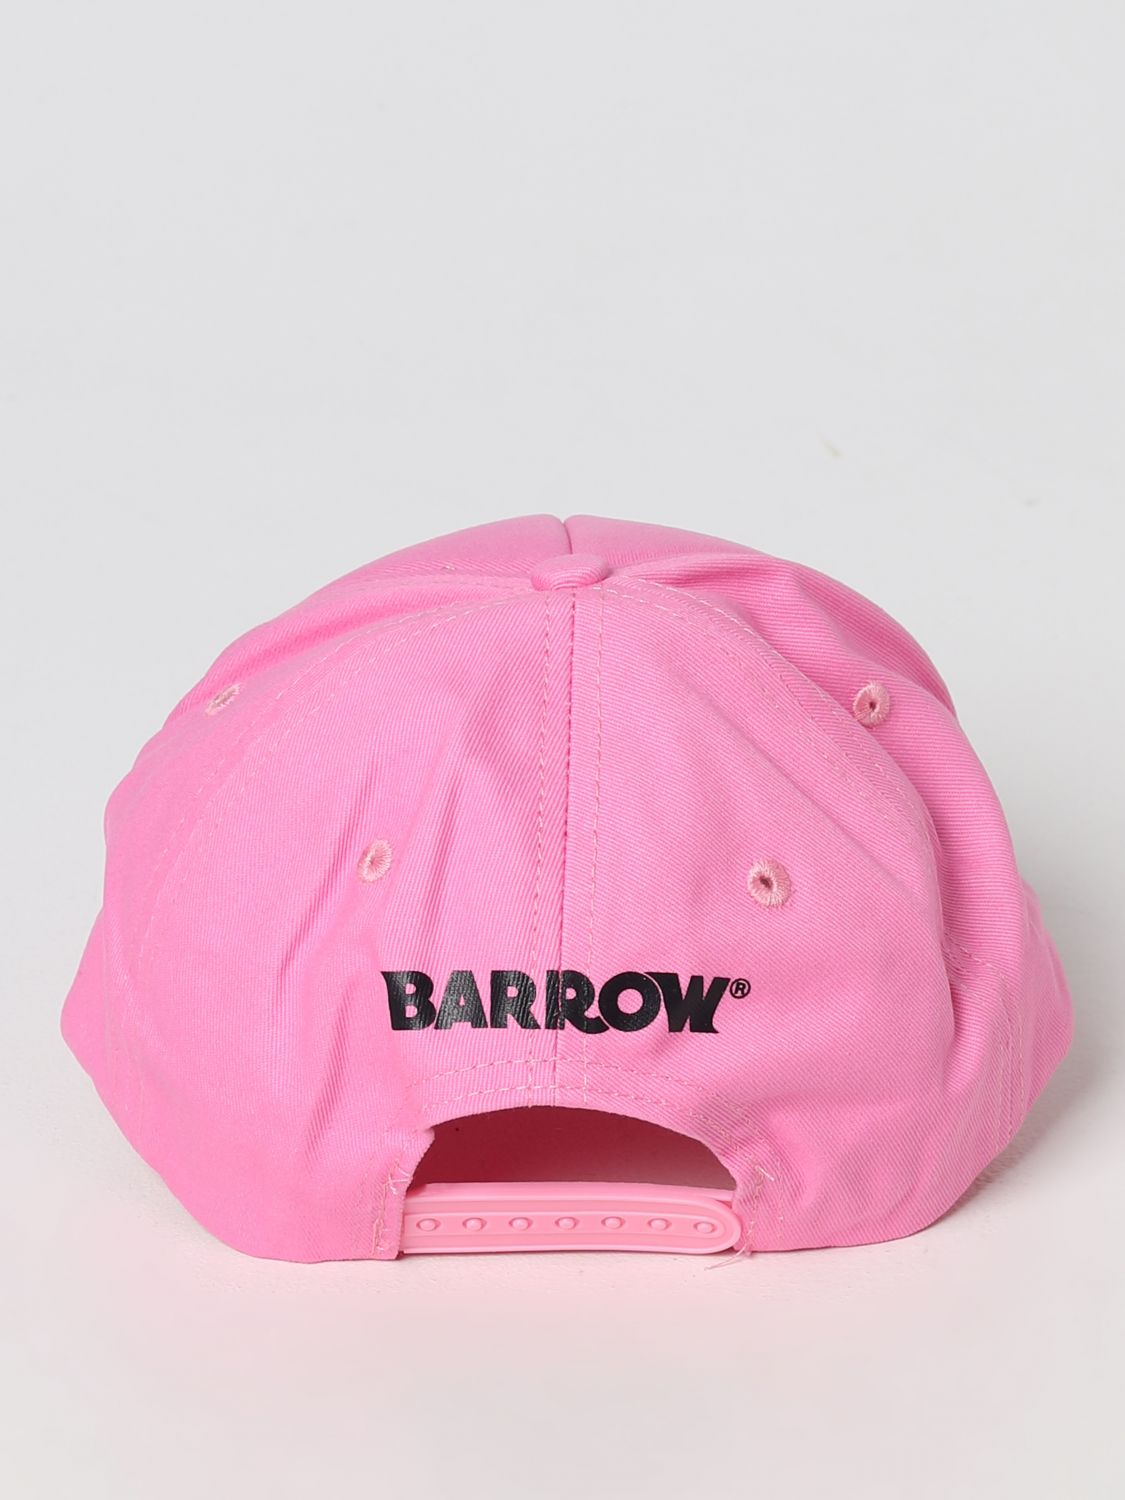 Hat Barrow: Barrow hat for men pink 3